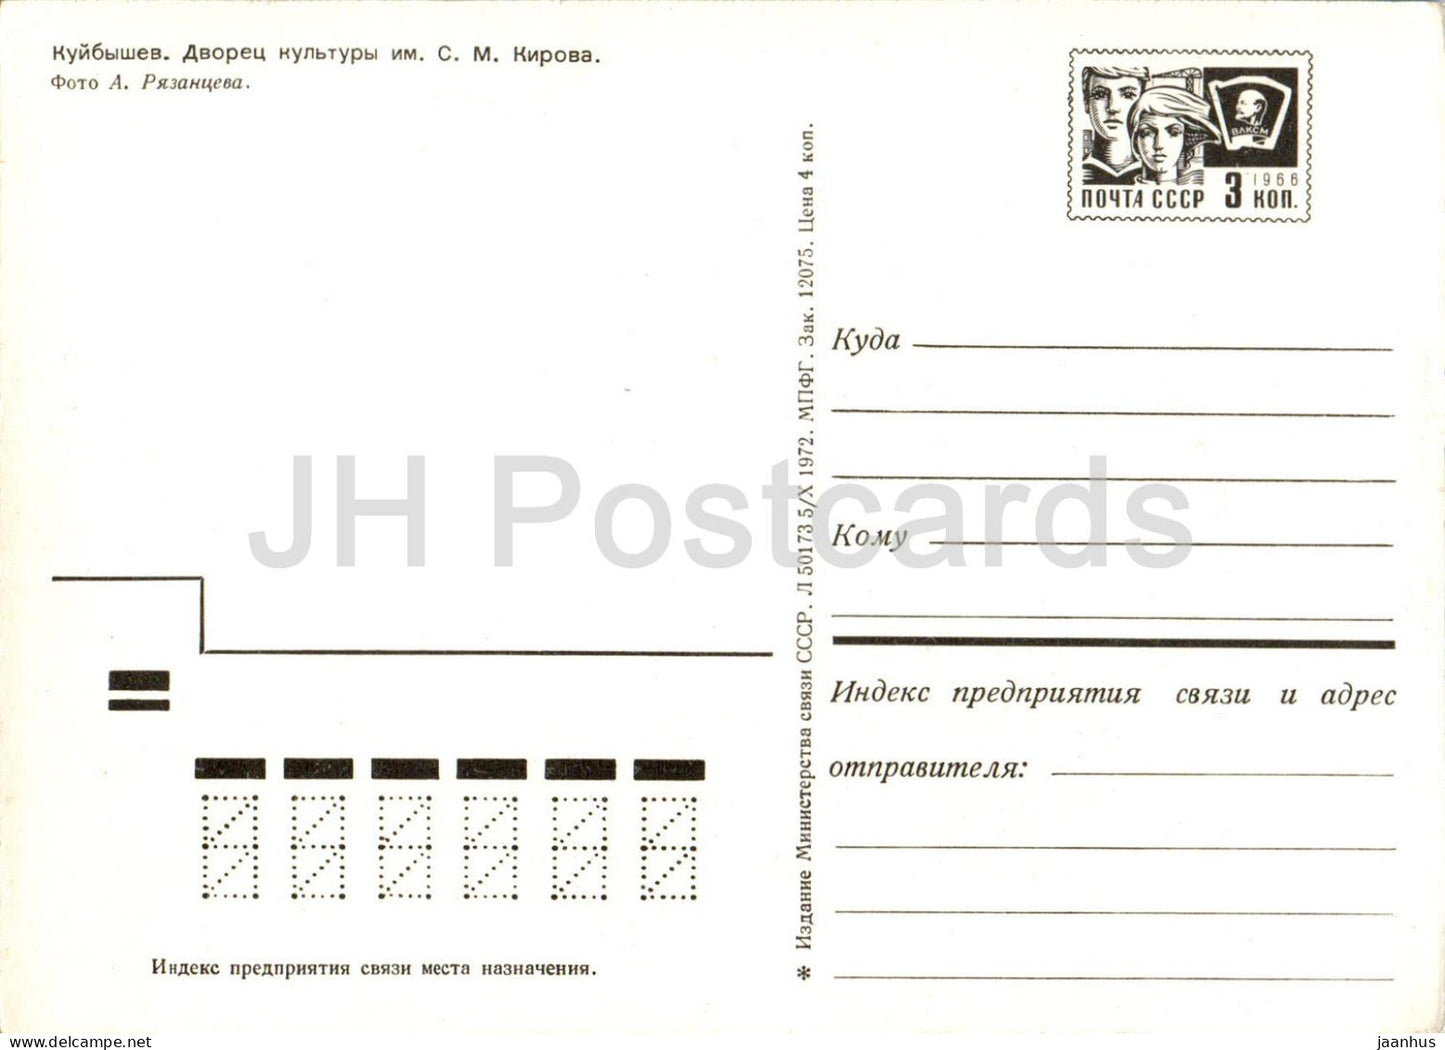 Kuybyshev - Samara - Kirov Palace of Culture - bus - postal stationery - 1972 - Russia USSR - unused